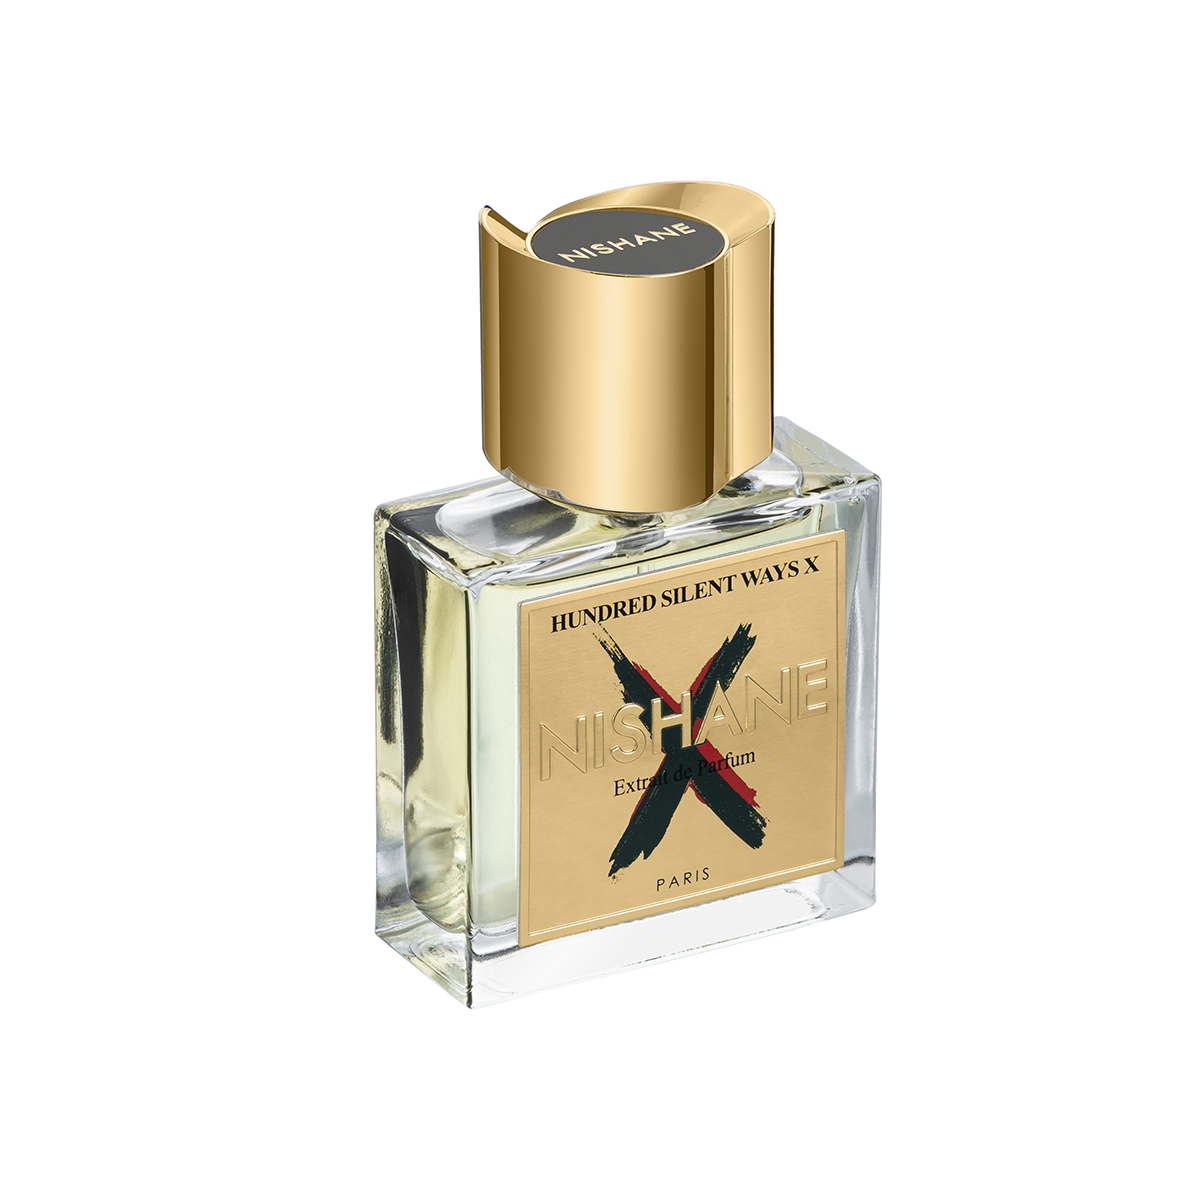 Nishane - Hundred Silent Ways X Extrait de Parfum